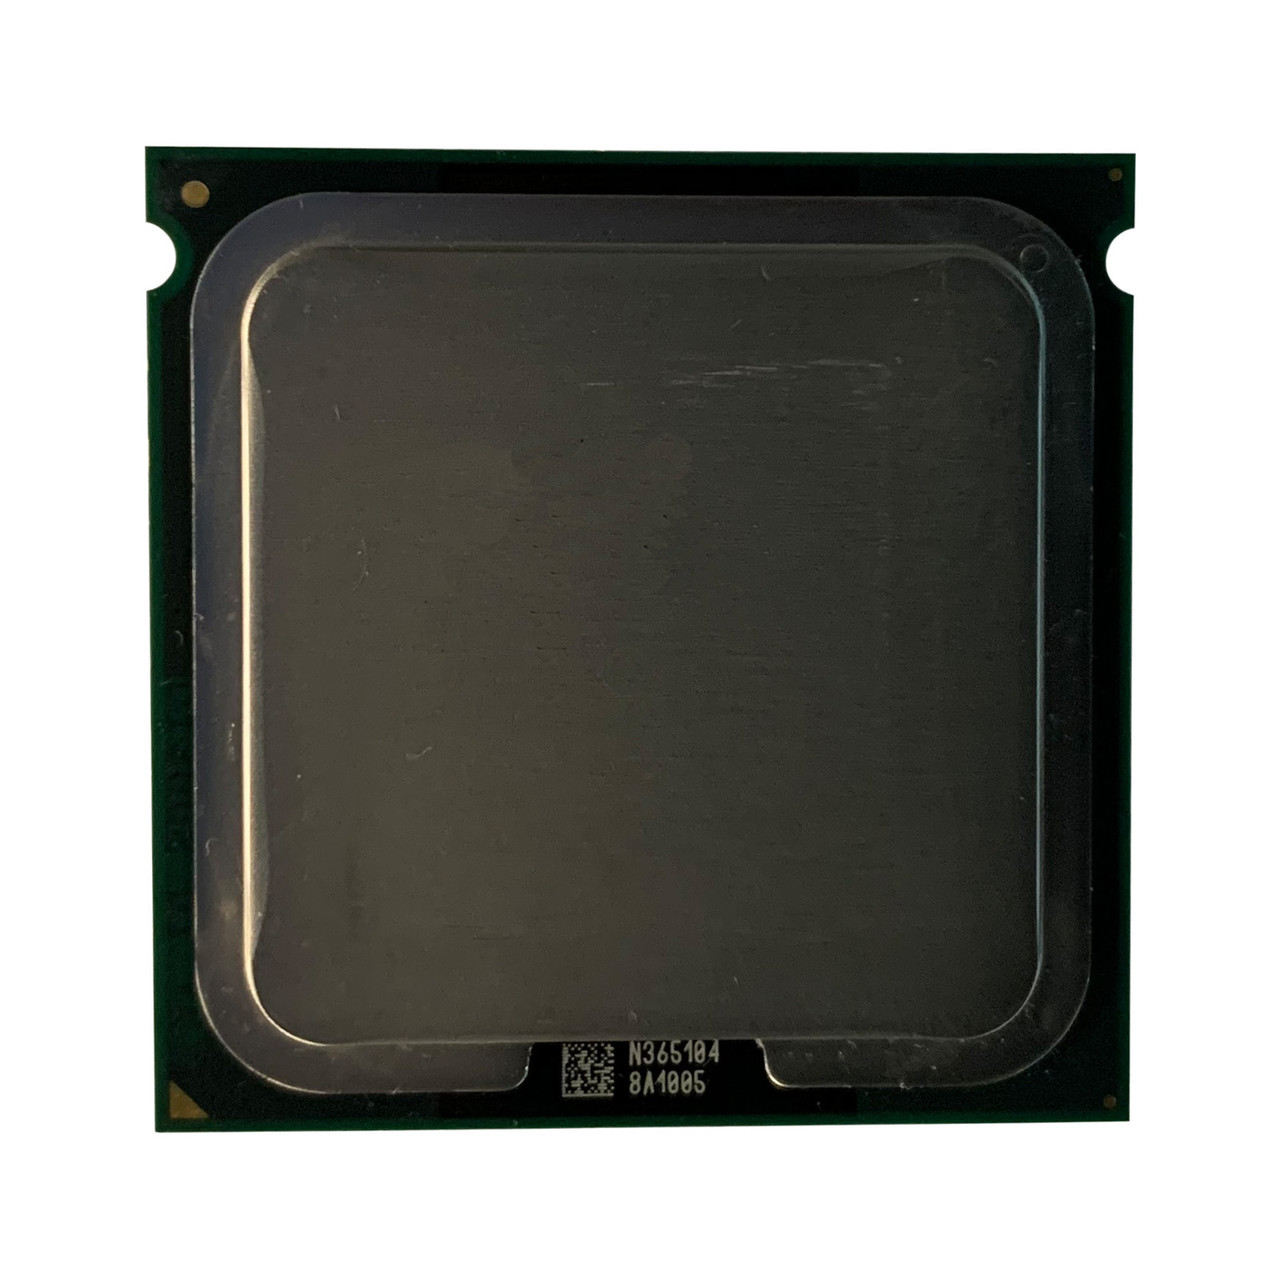 Dell TY808 Xeon X5460 QC 3.16Ghz 12MB 1333Mhz Processor